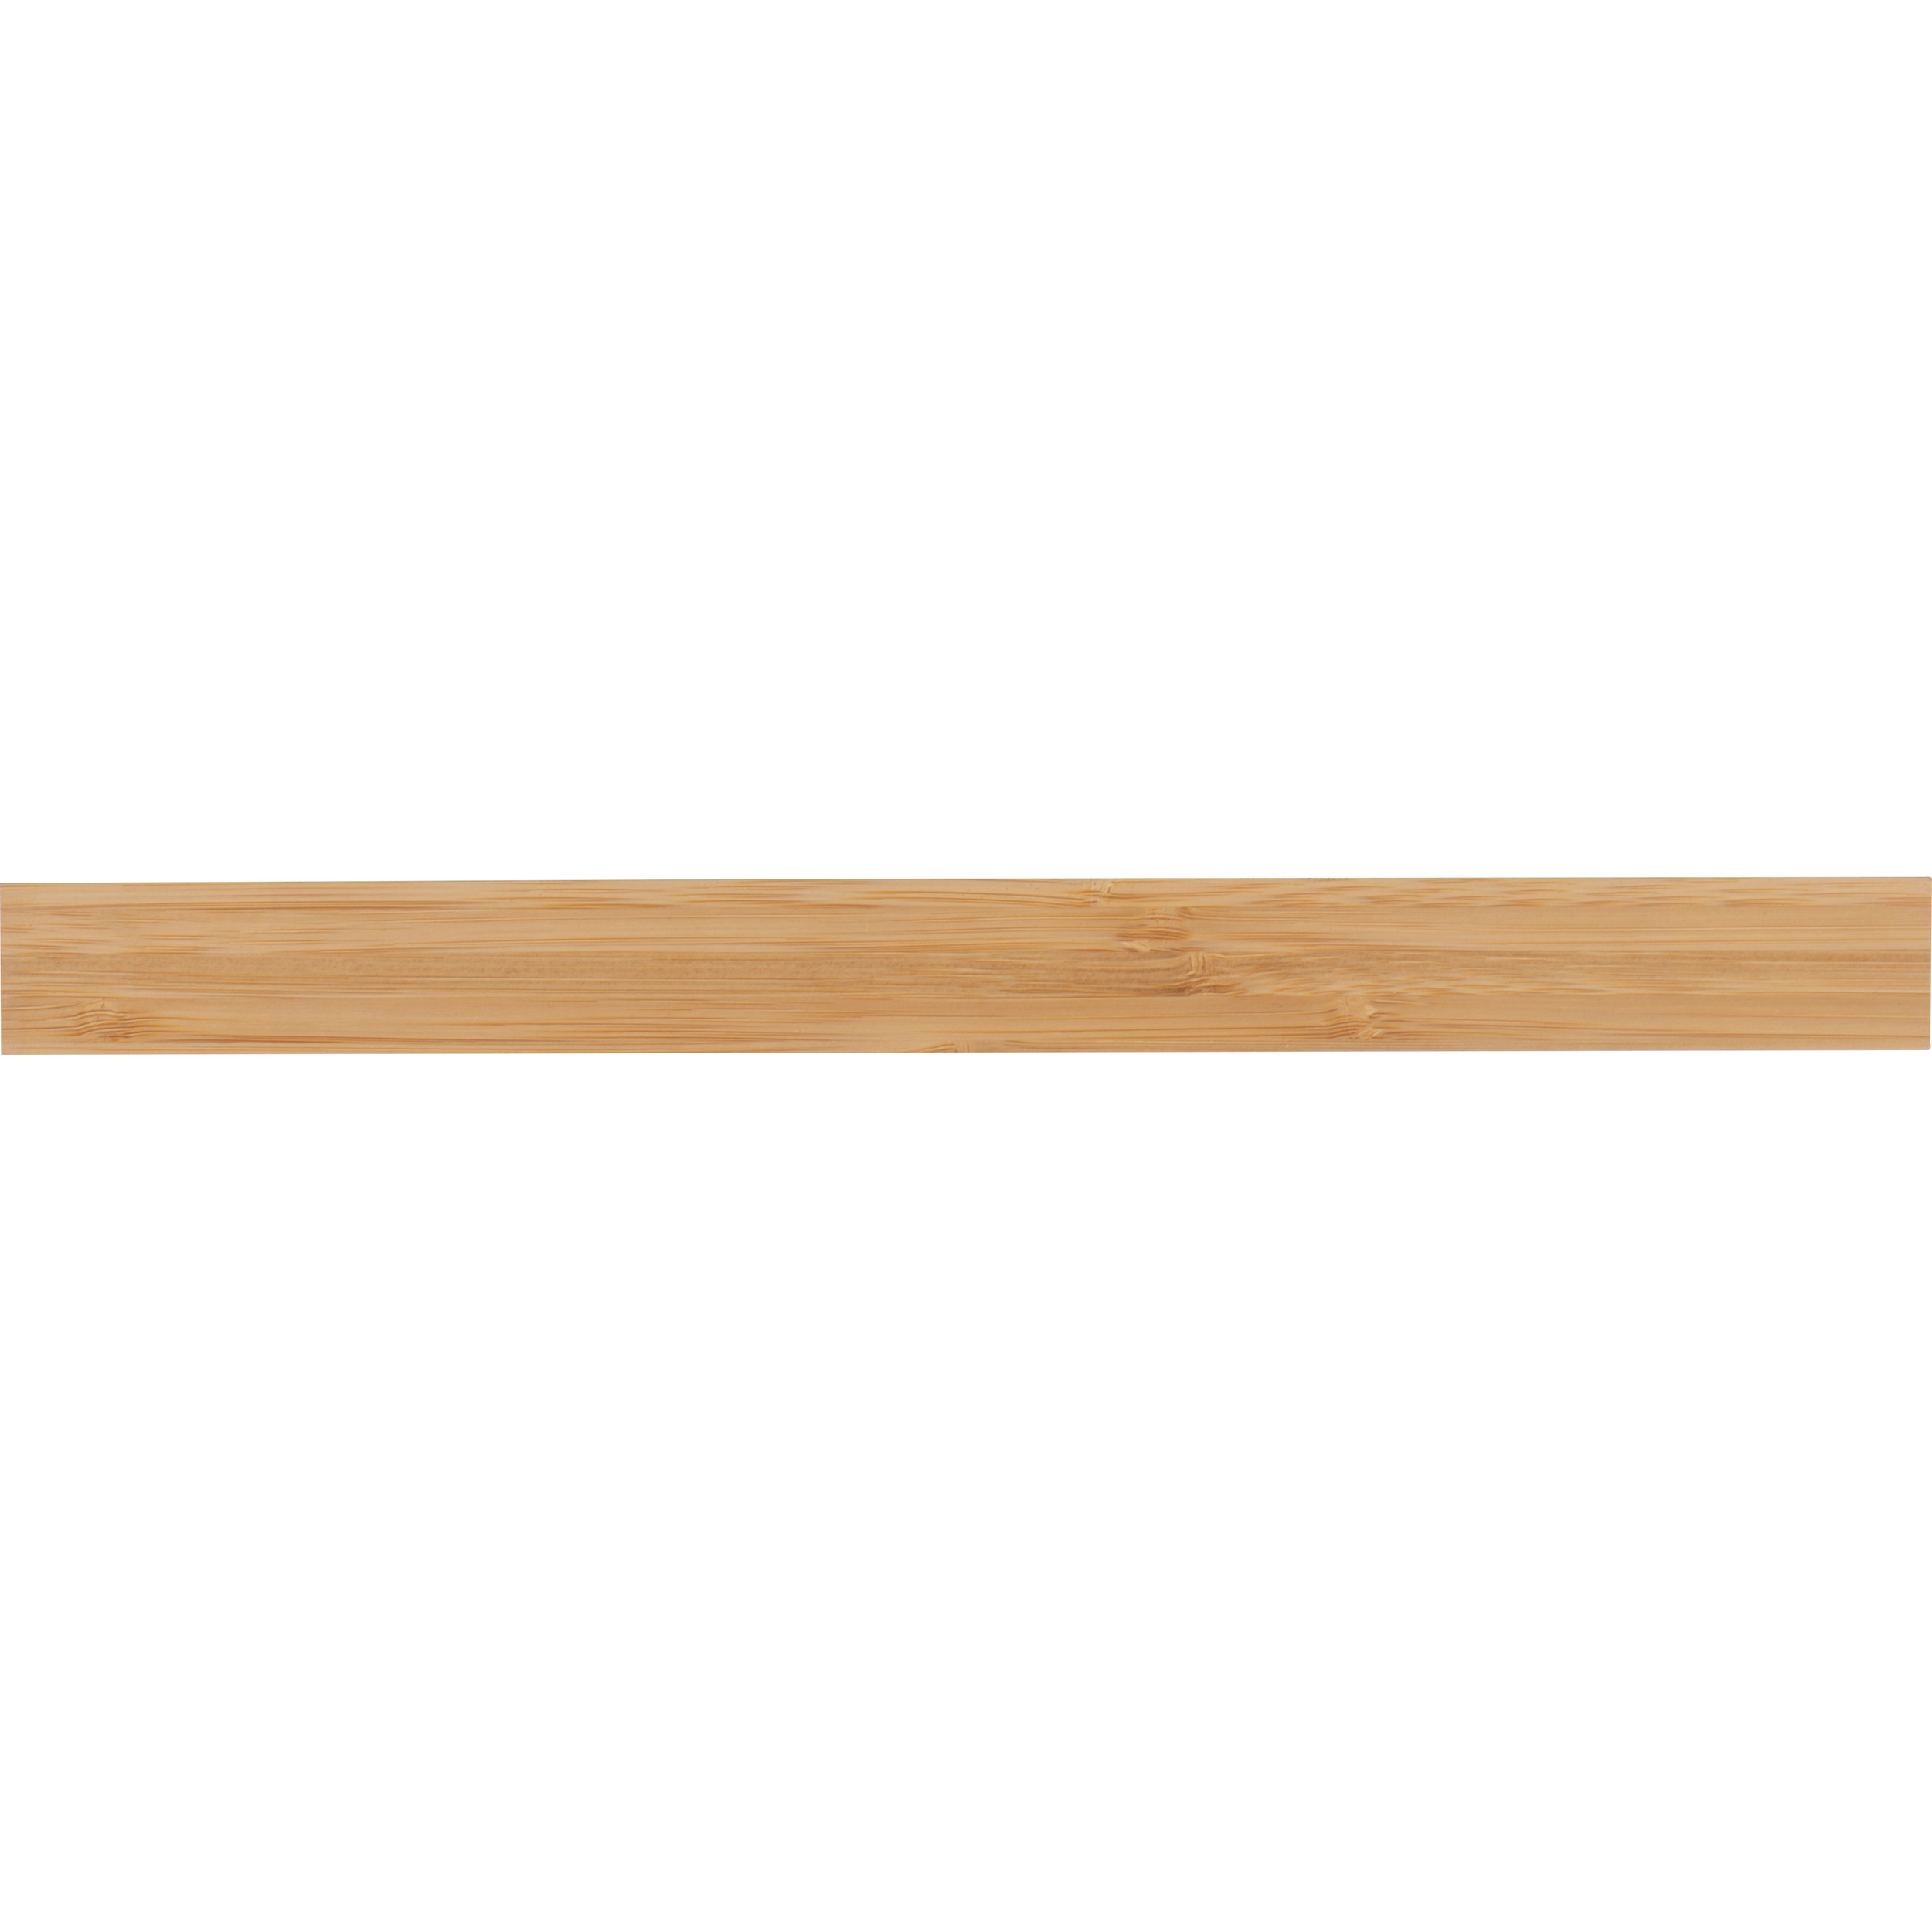 Bamboo ruler